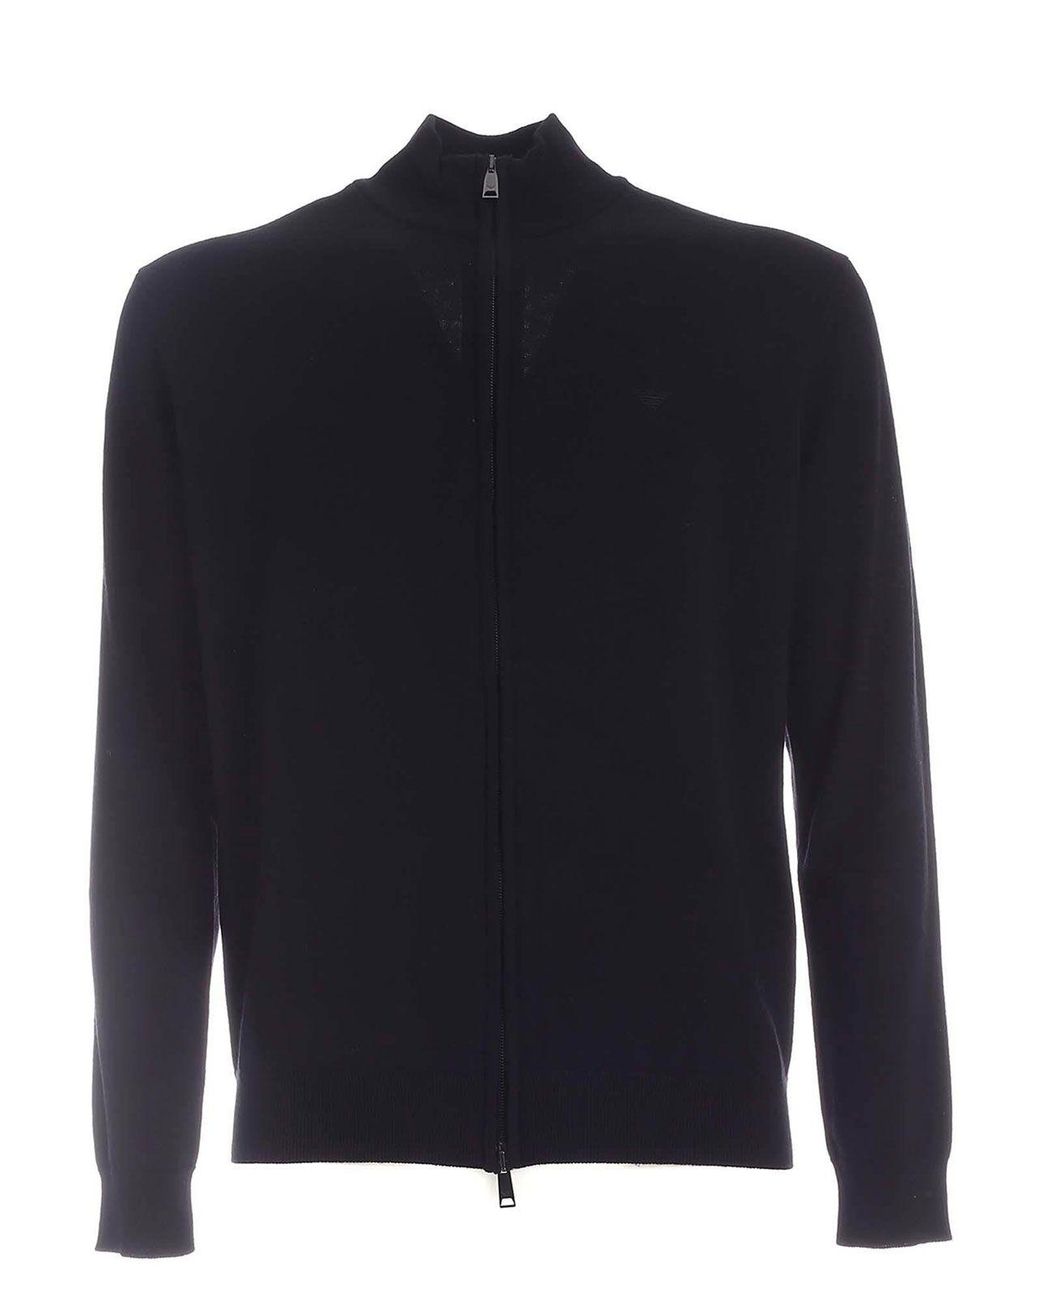 Emporio Armani Wool Cardigan in Black for Men - Lyst